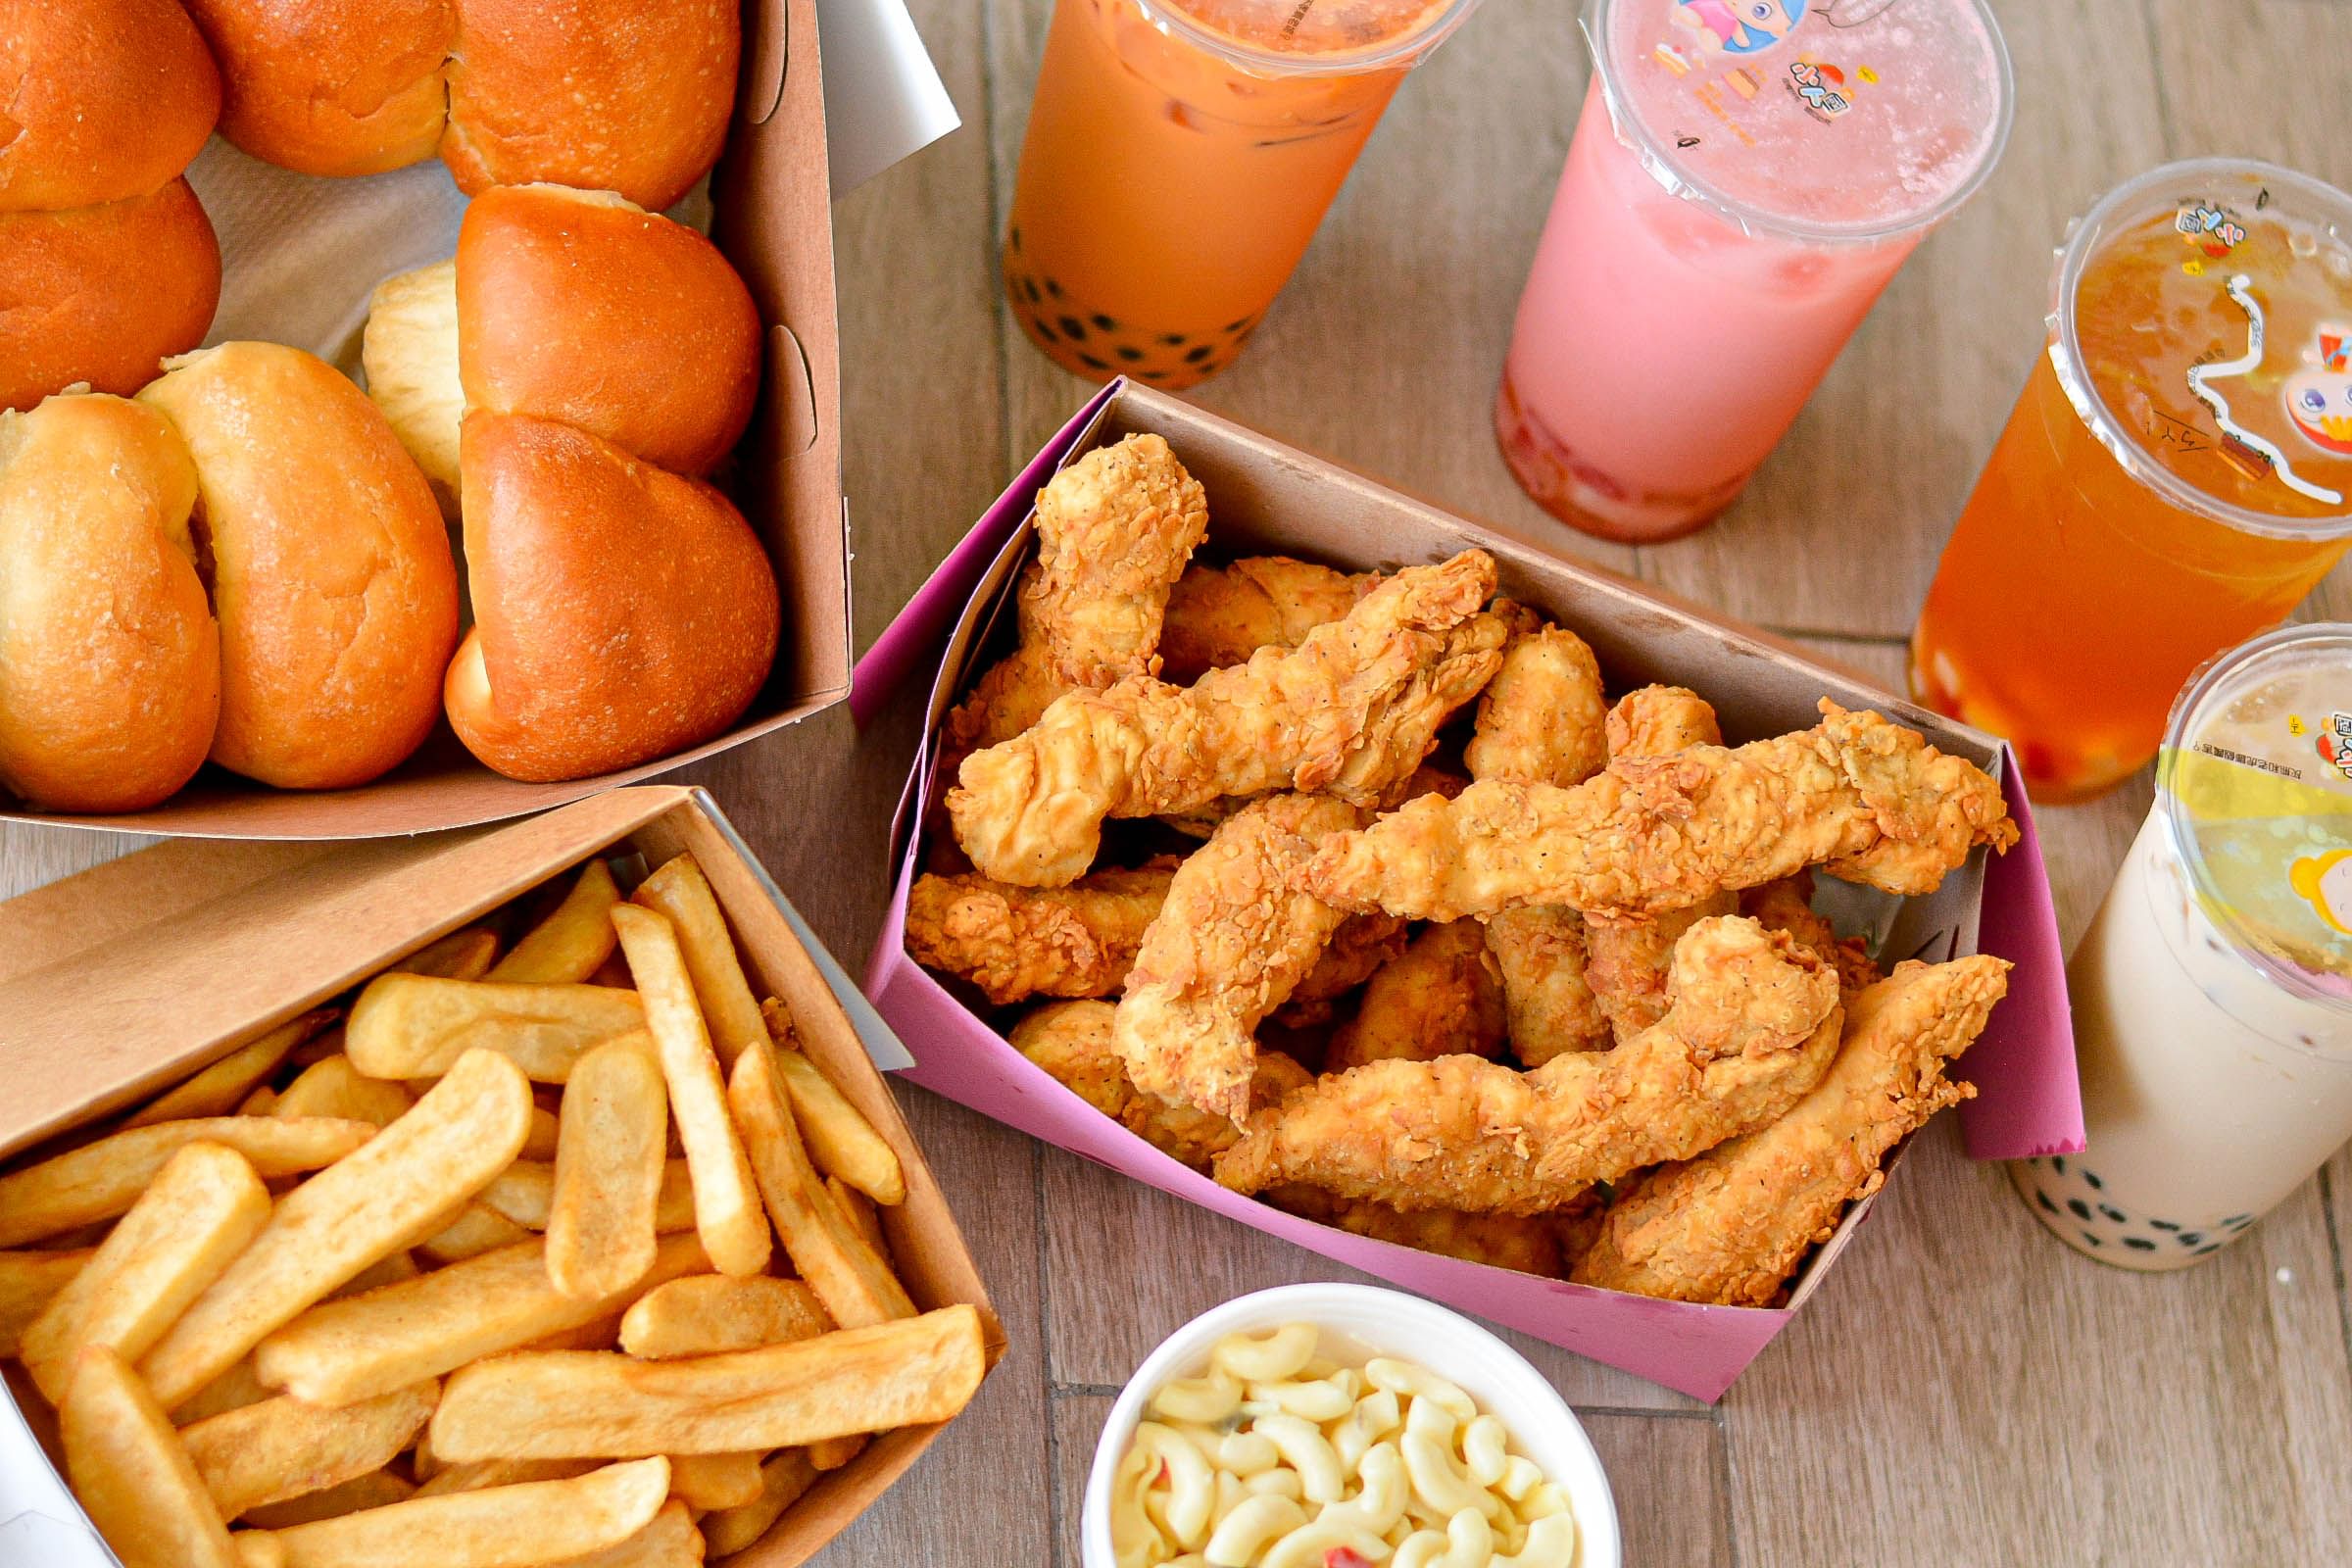 Soul Food Delights: Fried Chicken, Grits, Collard Greens